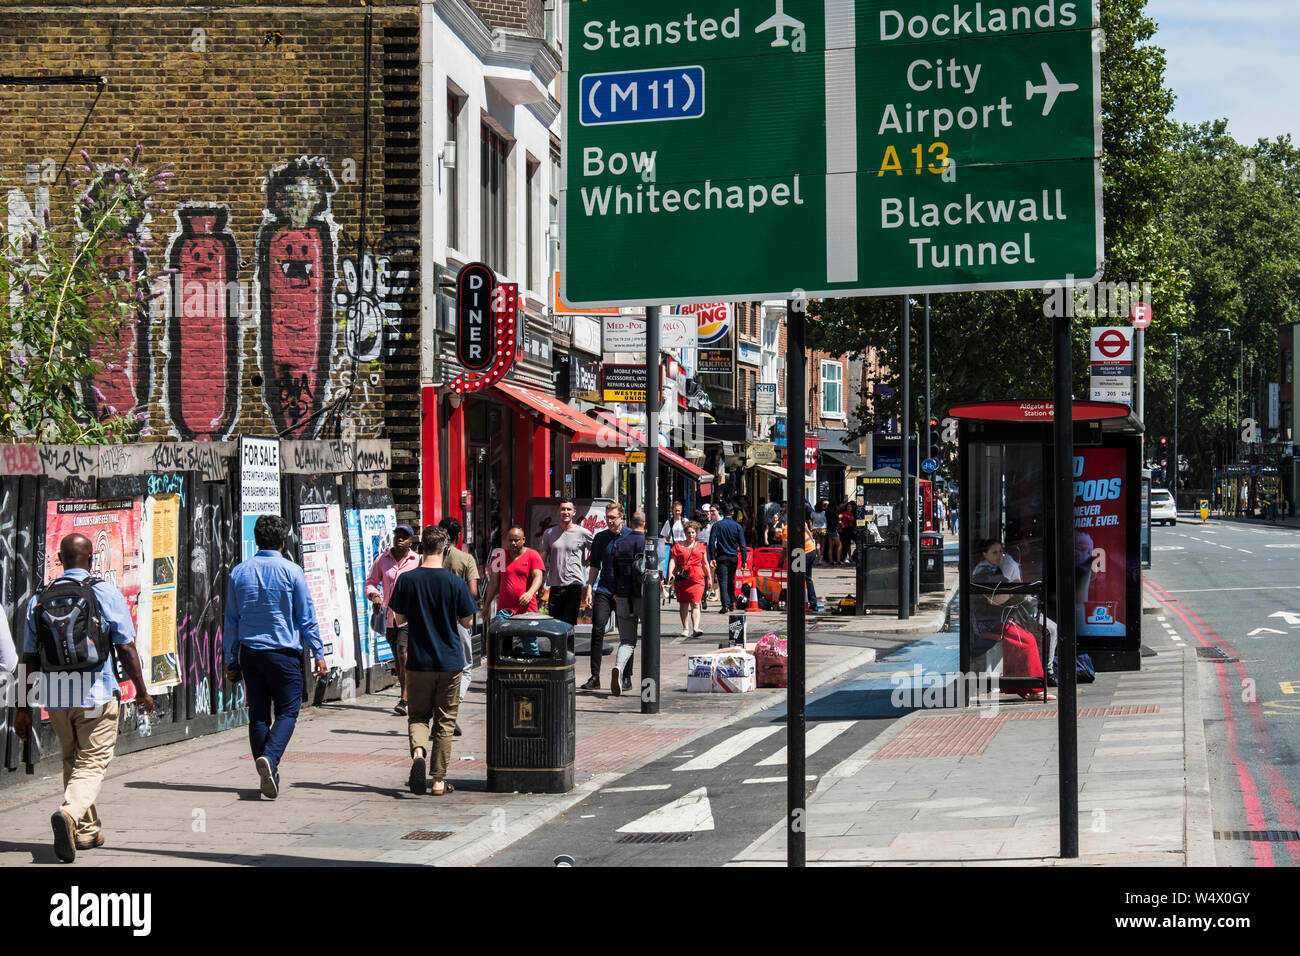 Whitechapel High Street, Borough of Tower Hamlets, London, England, U.K. Stock Photo